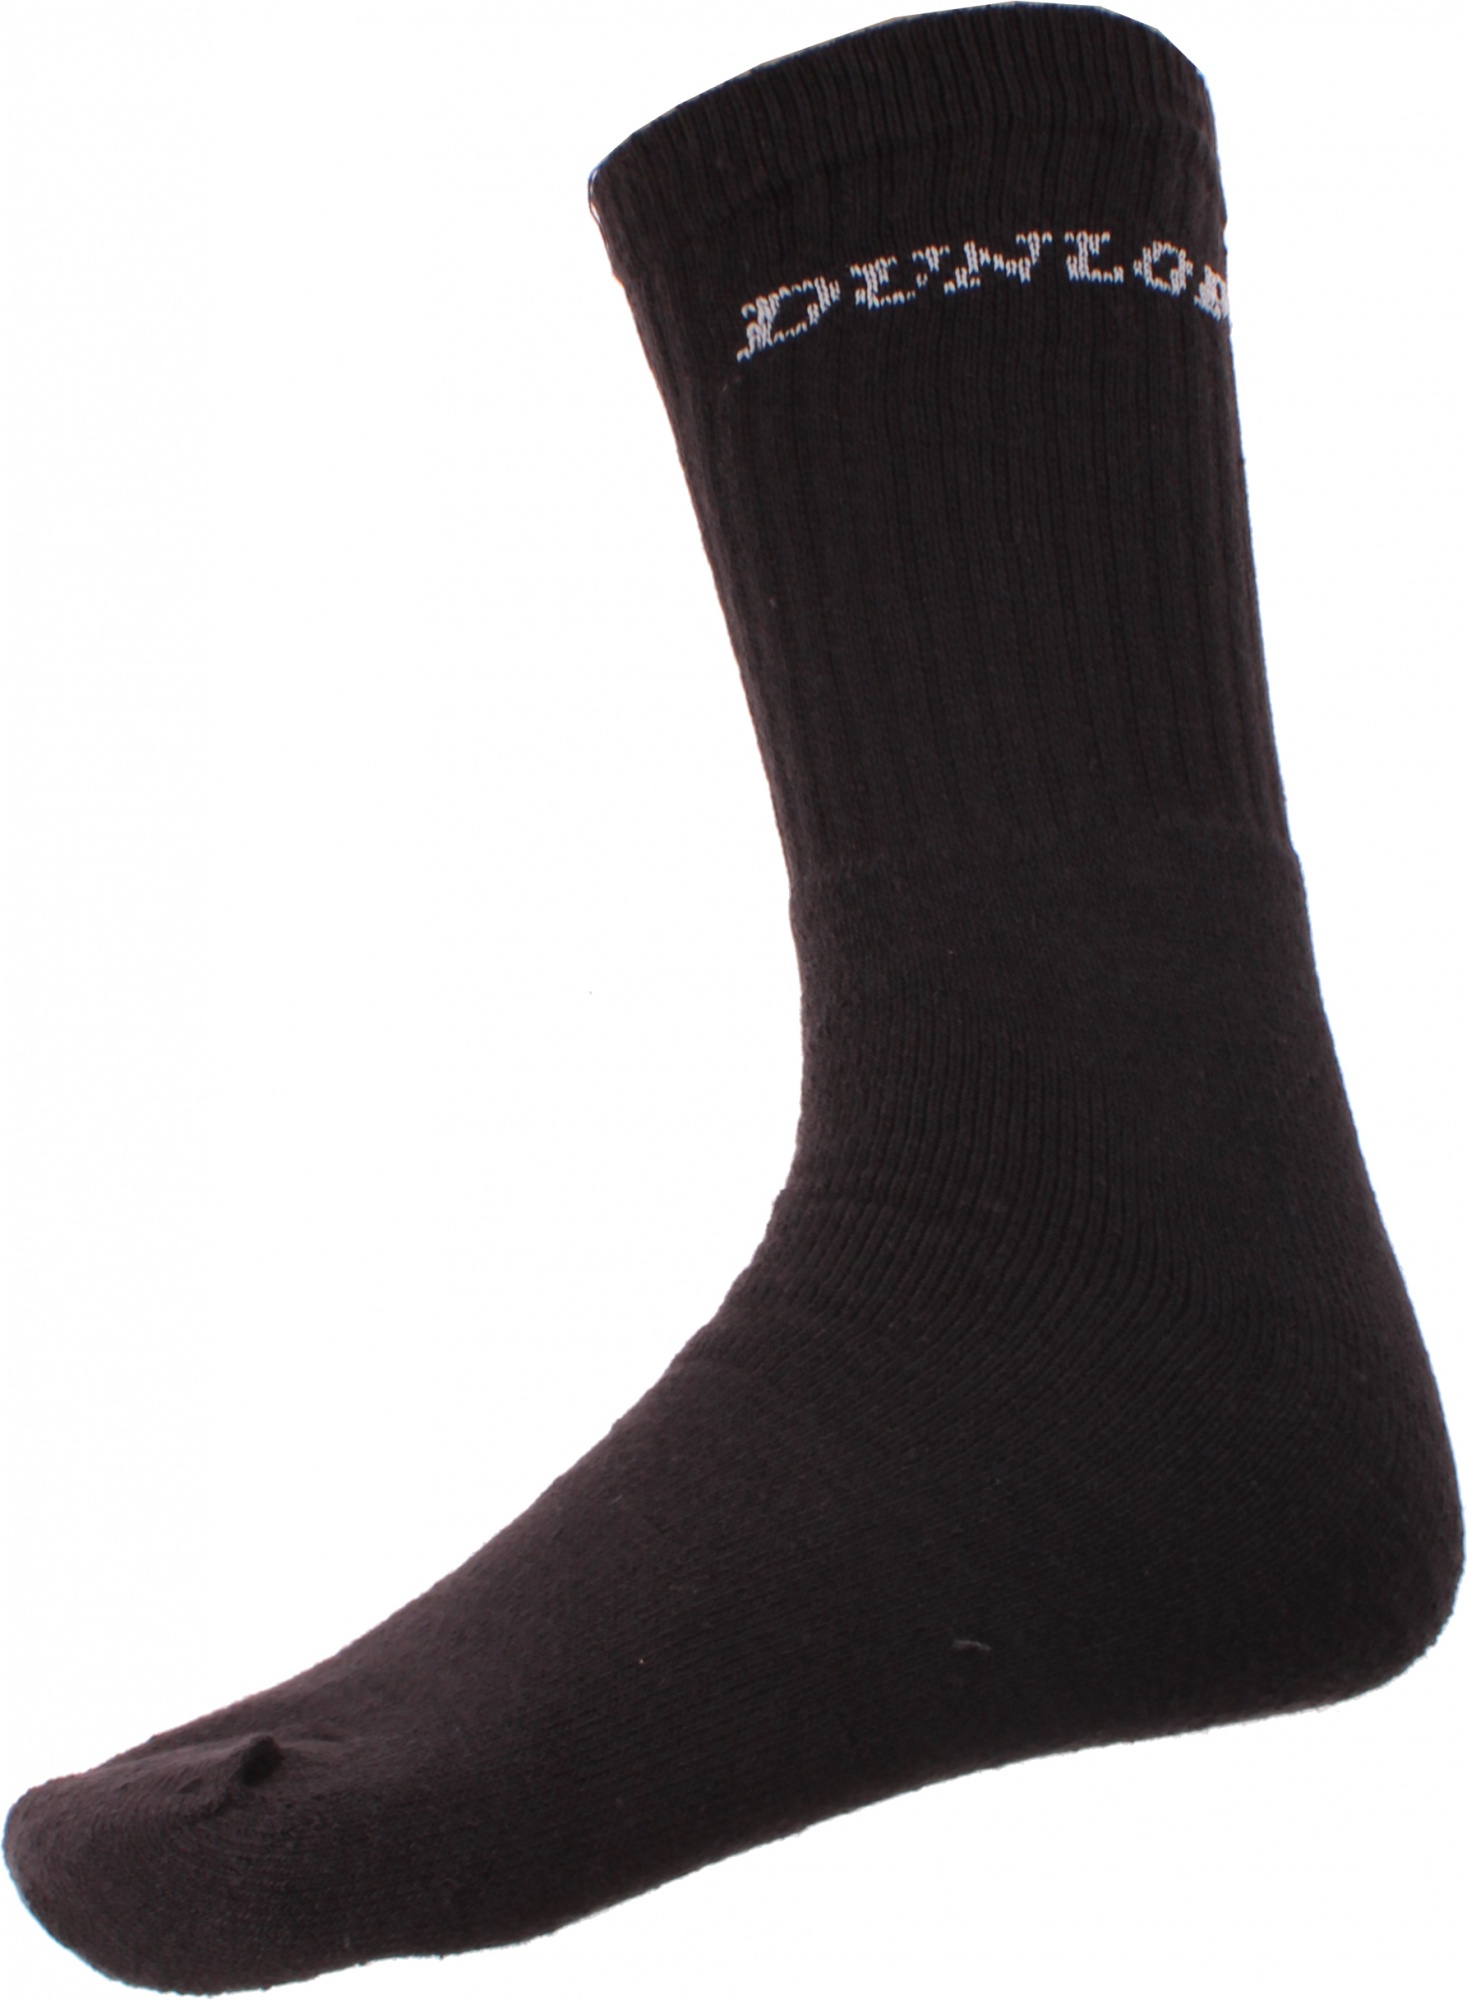 Socks 3 Pairs Dunlop Work Socks Thermo socks Tennis Sports Gym Exercise ...